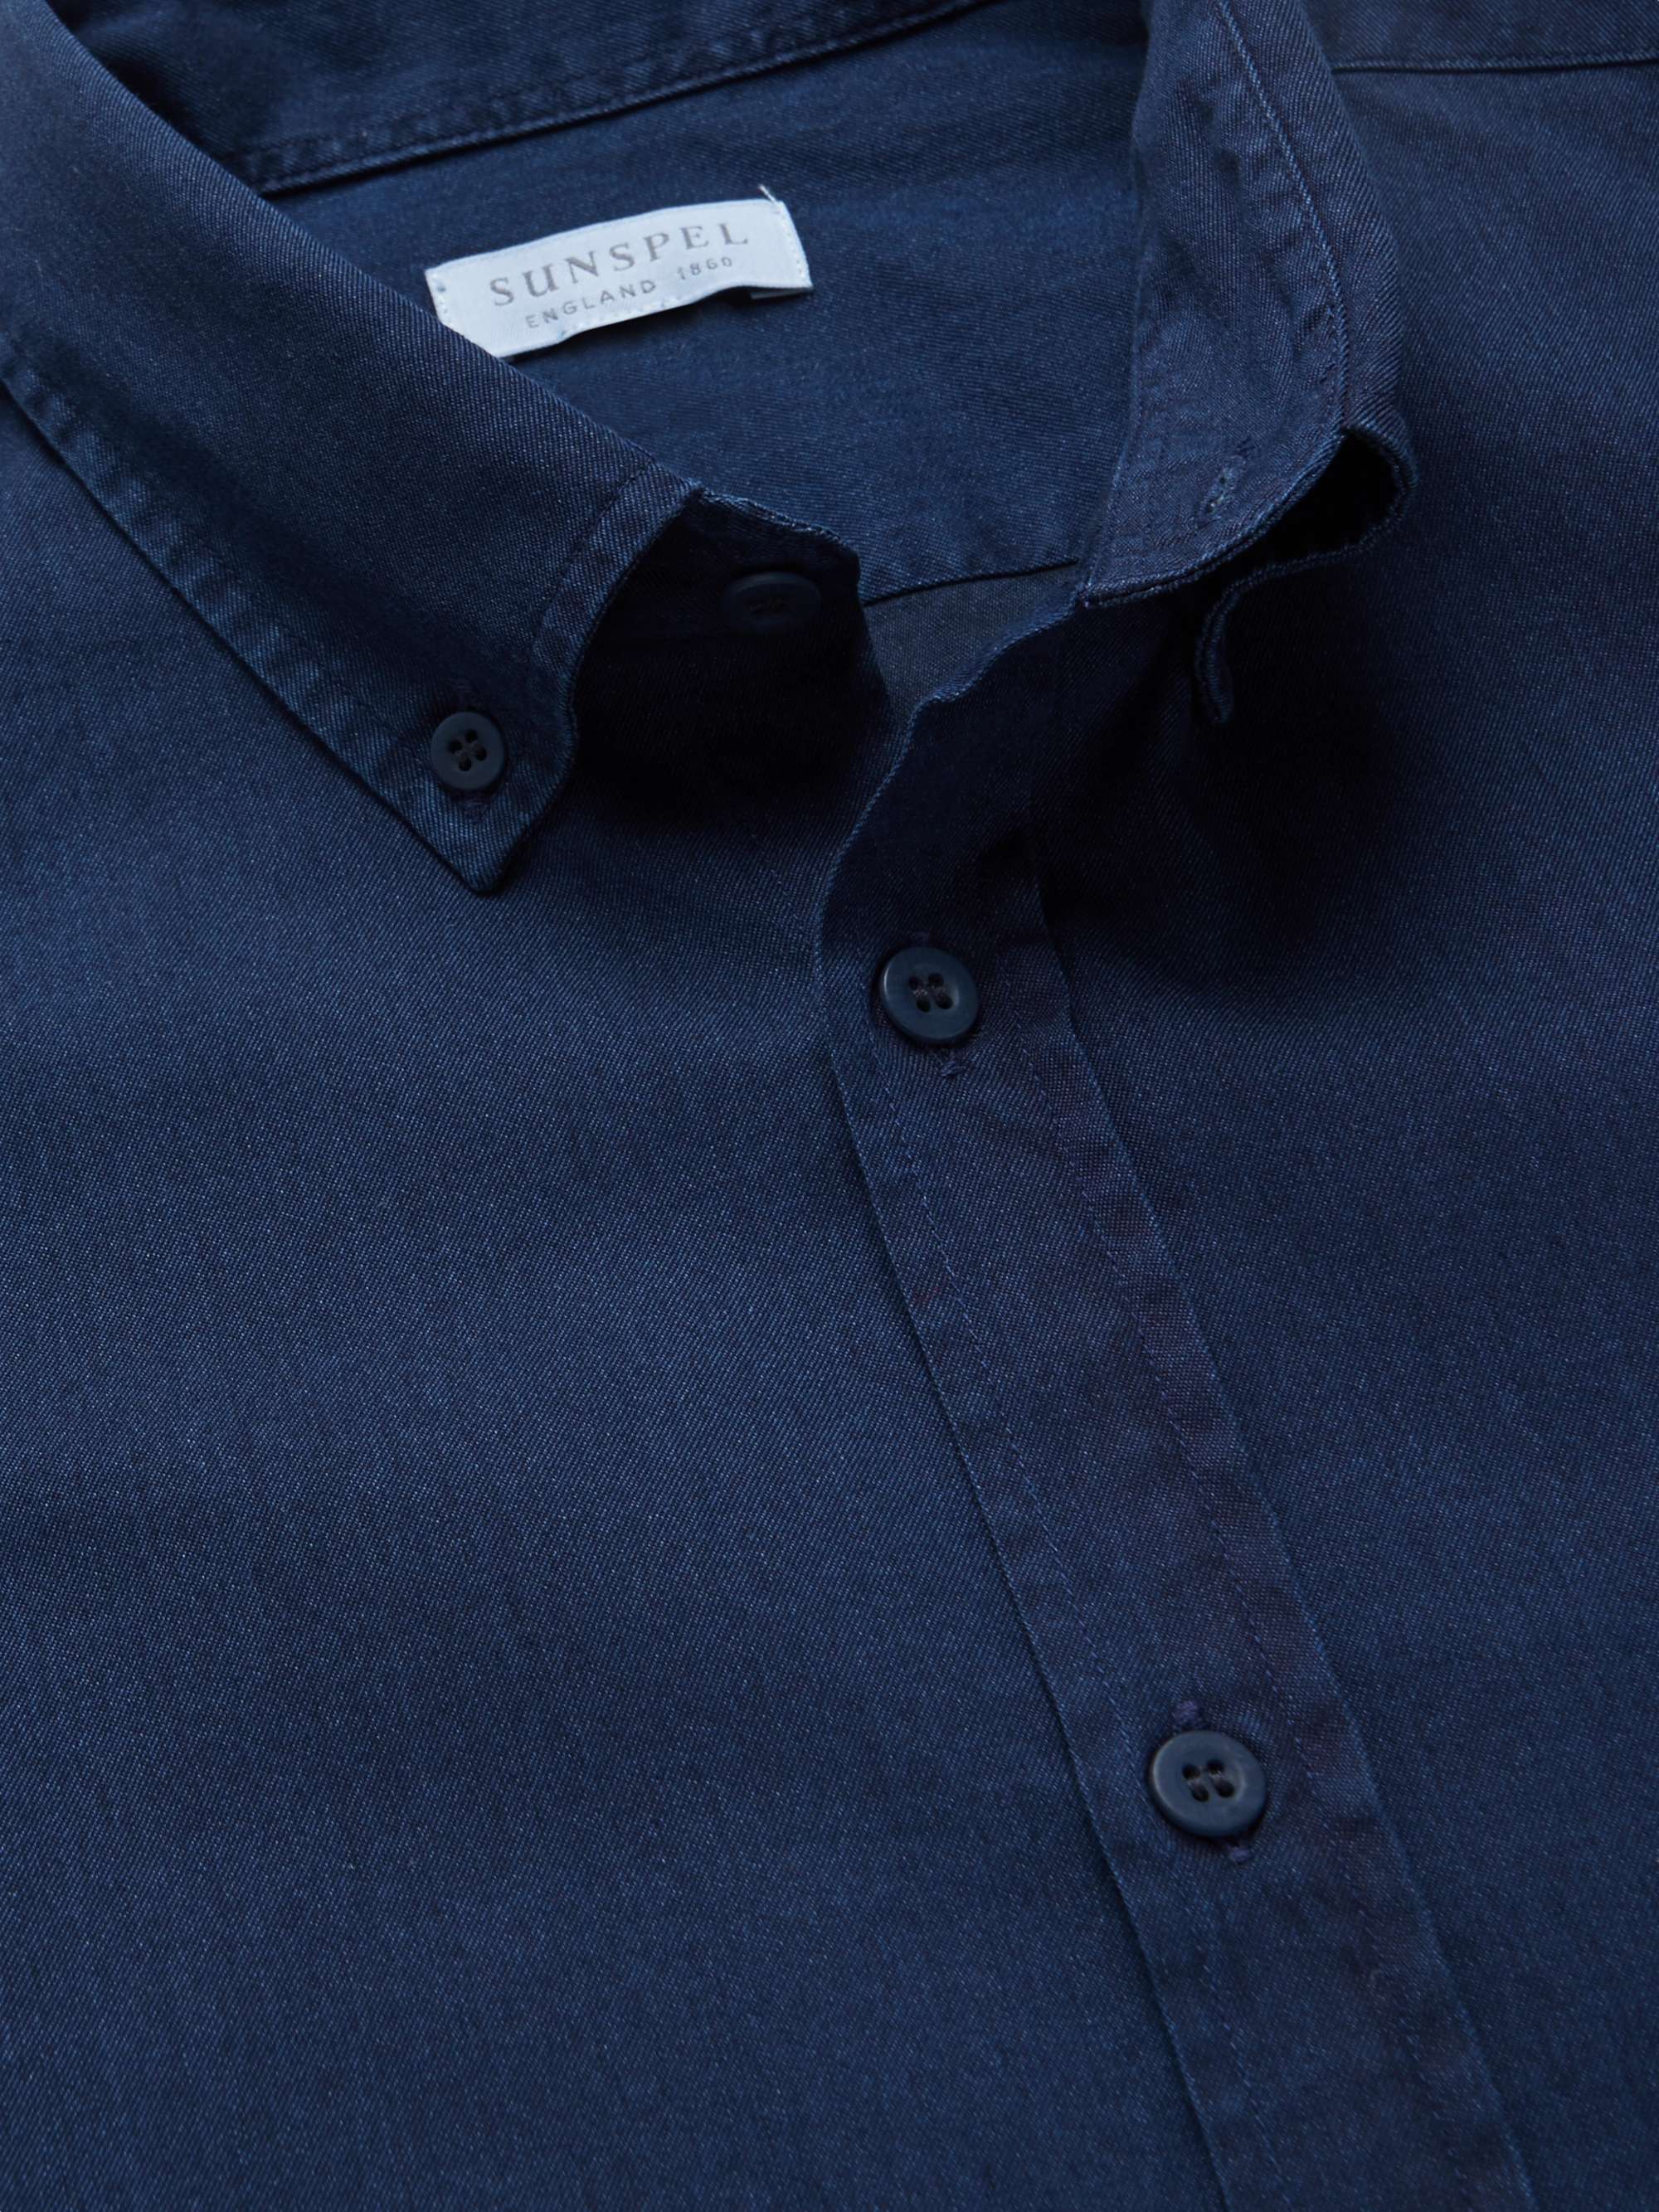 SUNSPEL Button-Down Collar Cotton-Chambray Shirt